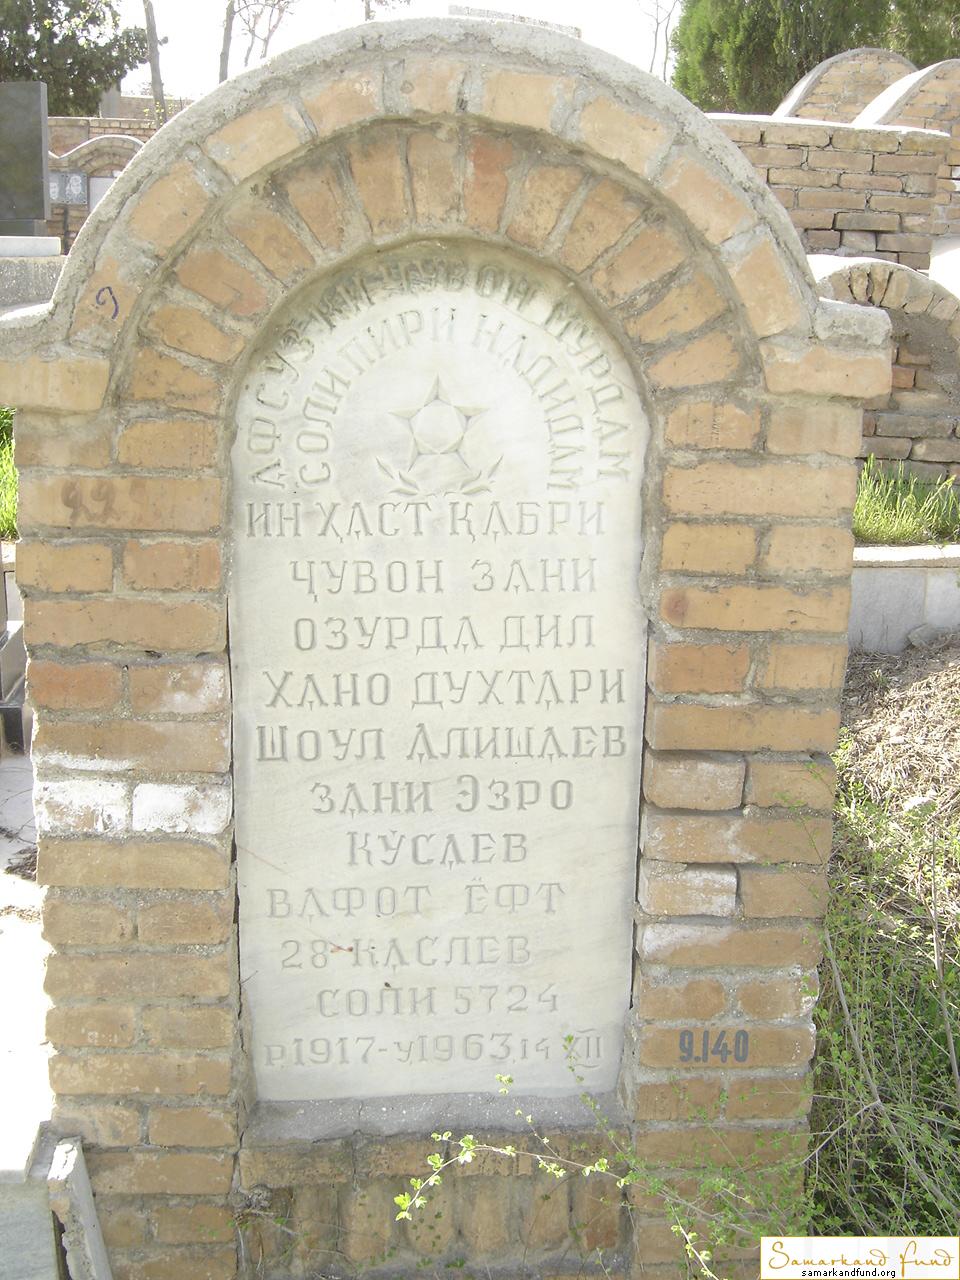 Алишаев Шоул  1917 - 1963 зах.№ 9.JPG